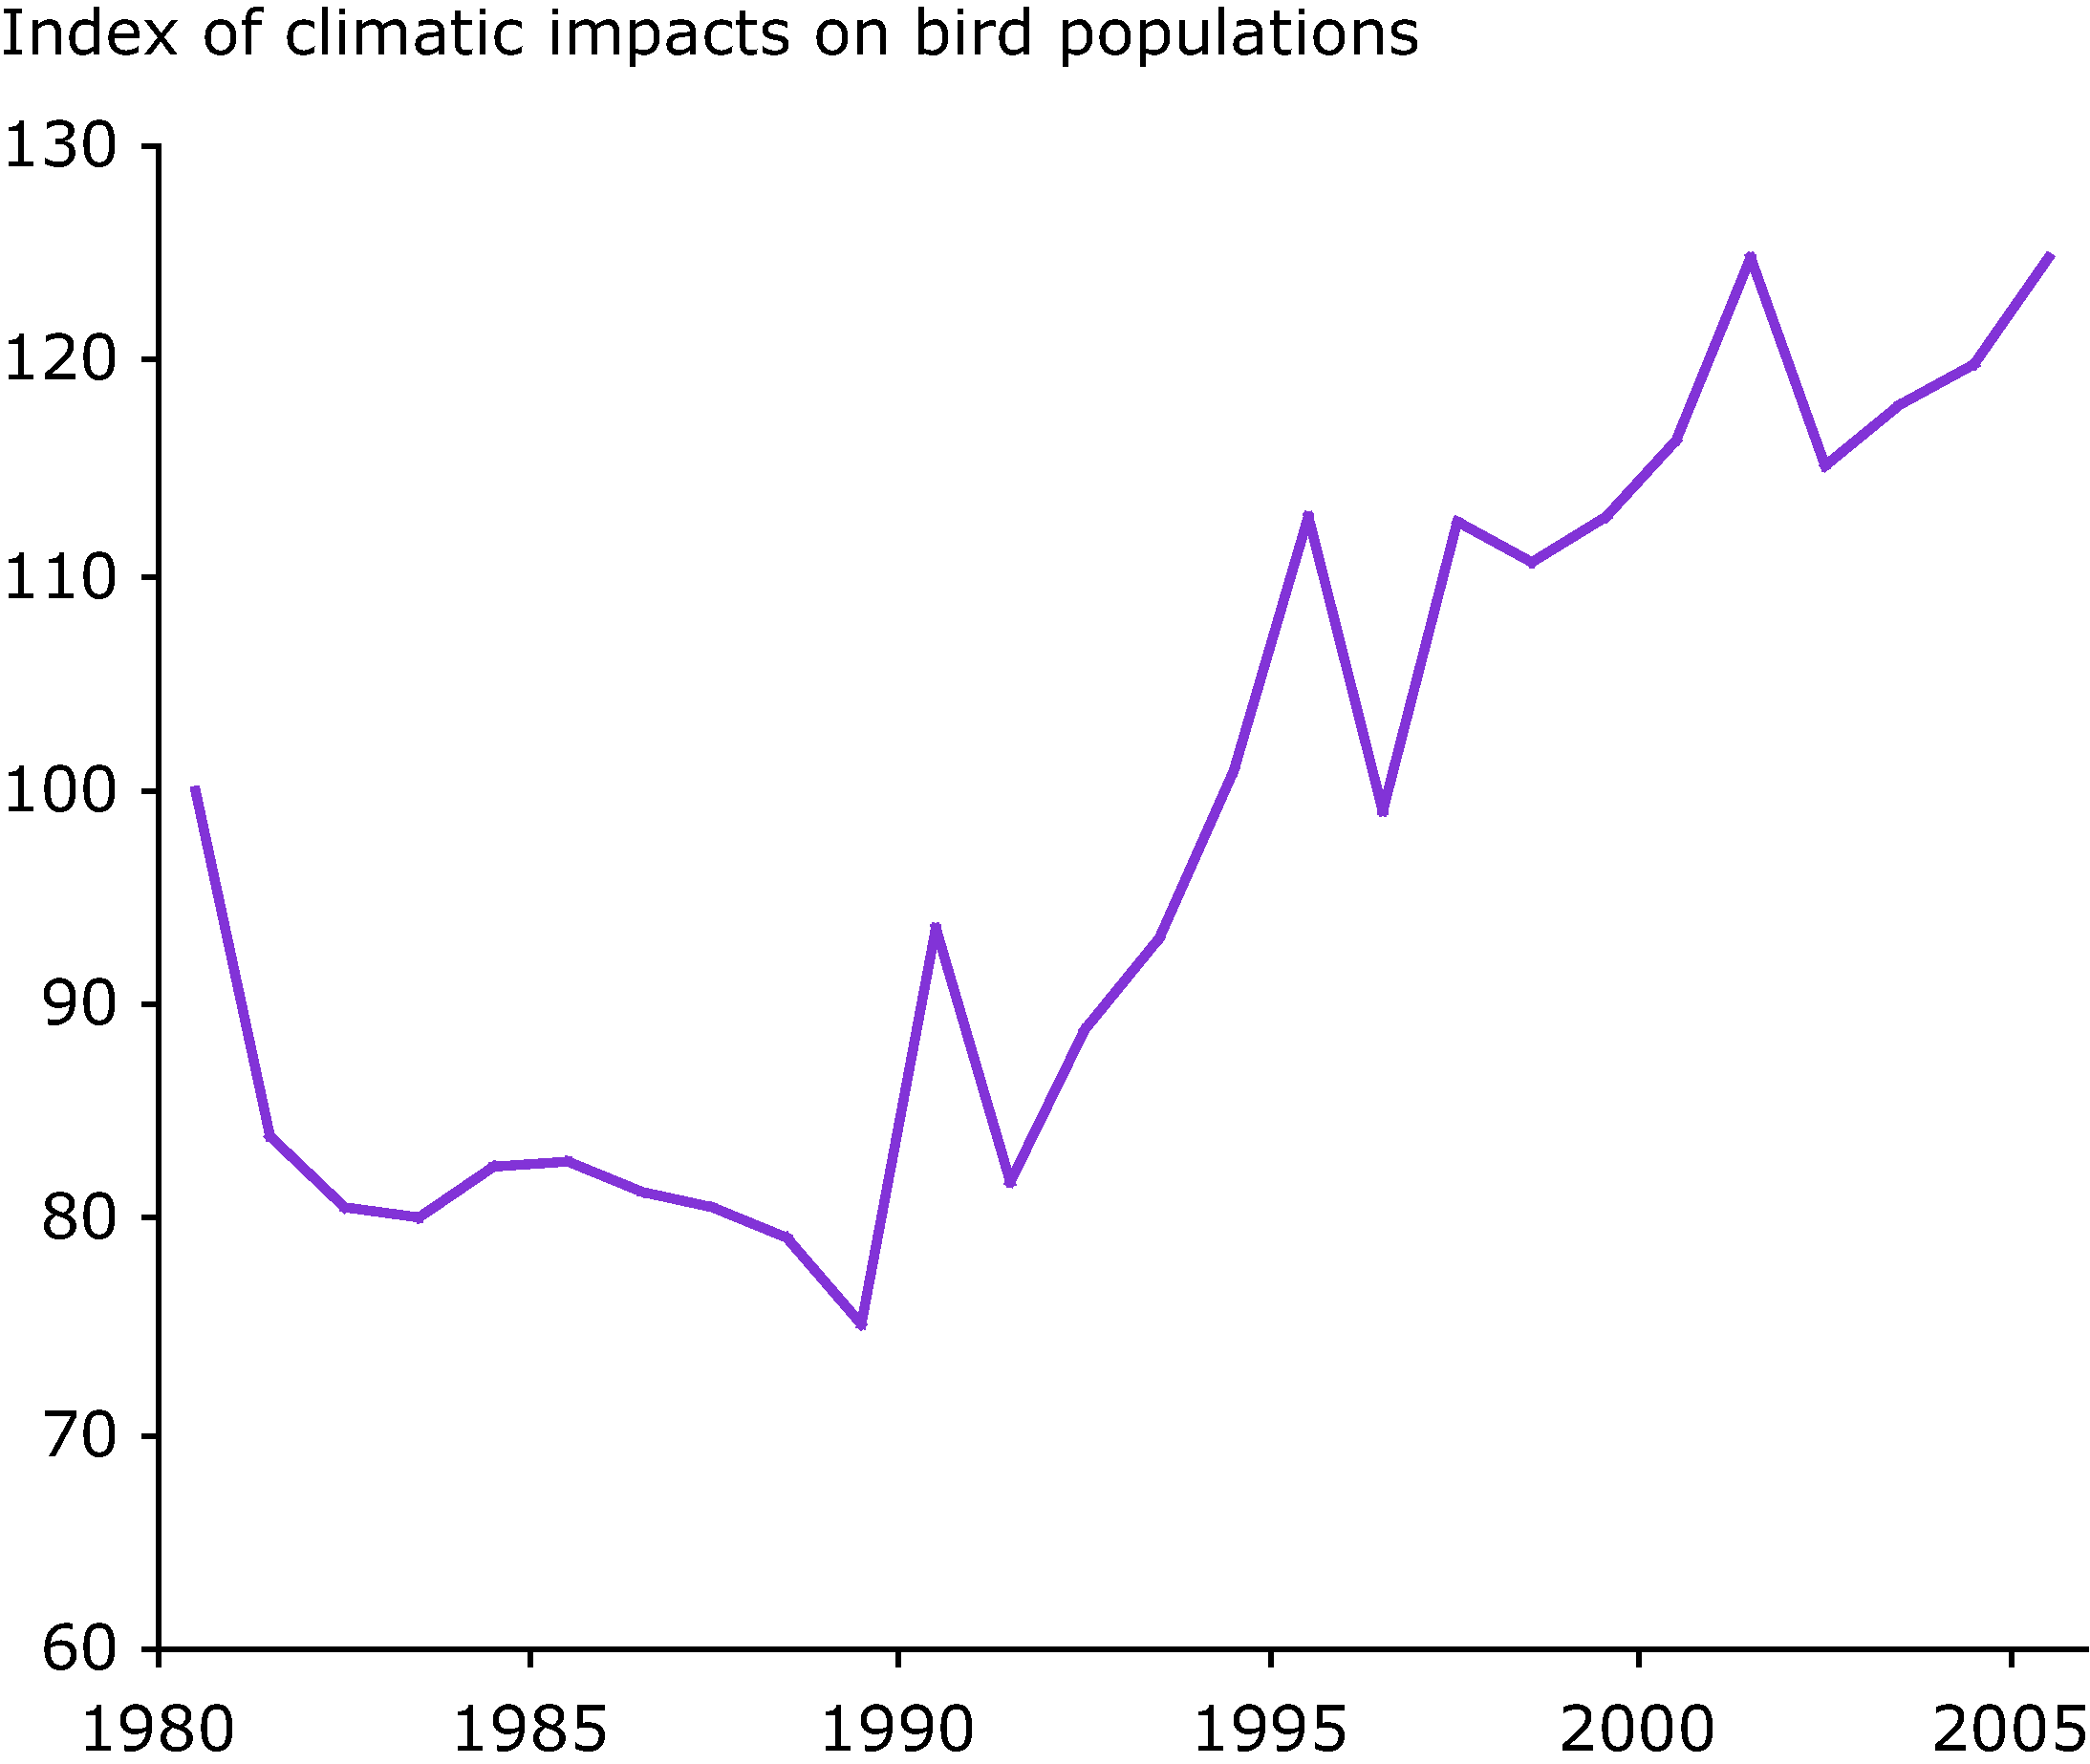 Climate change impact indicator for European birds